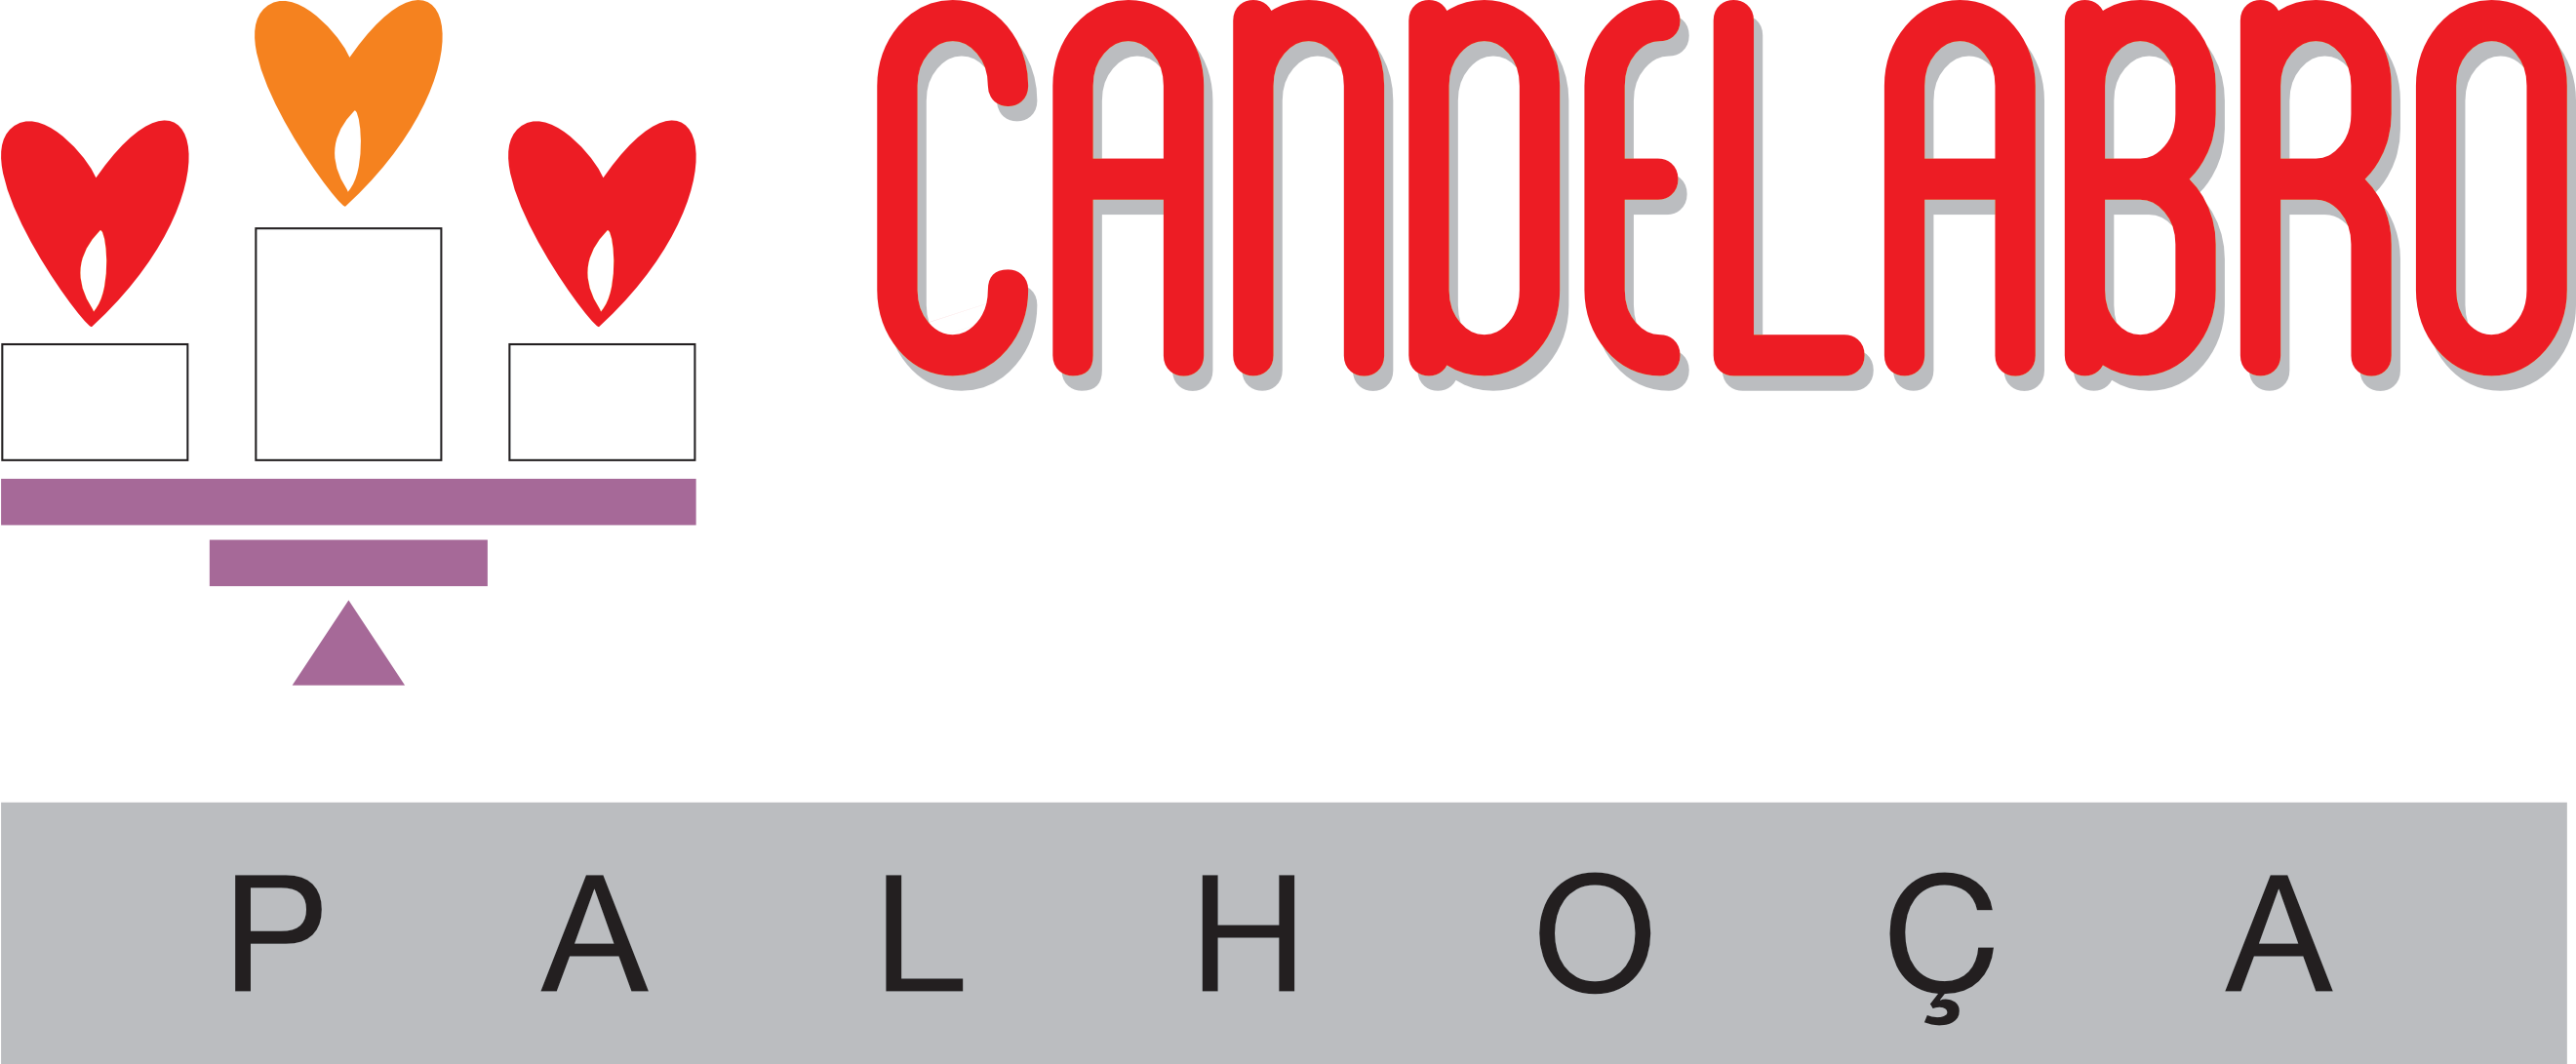 Candelabro Motel